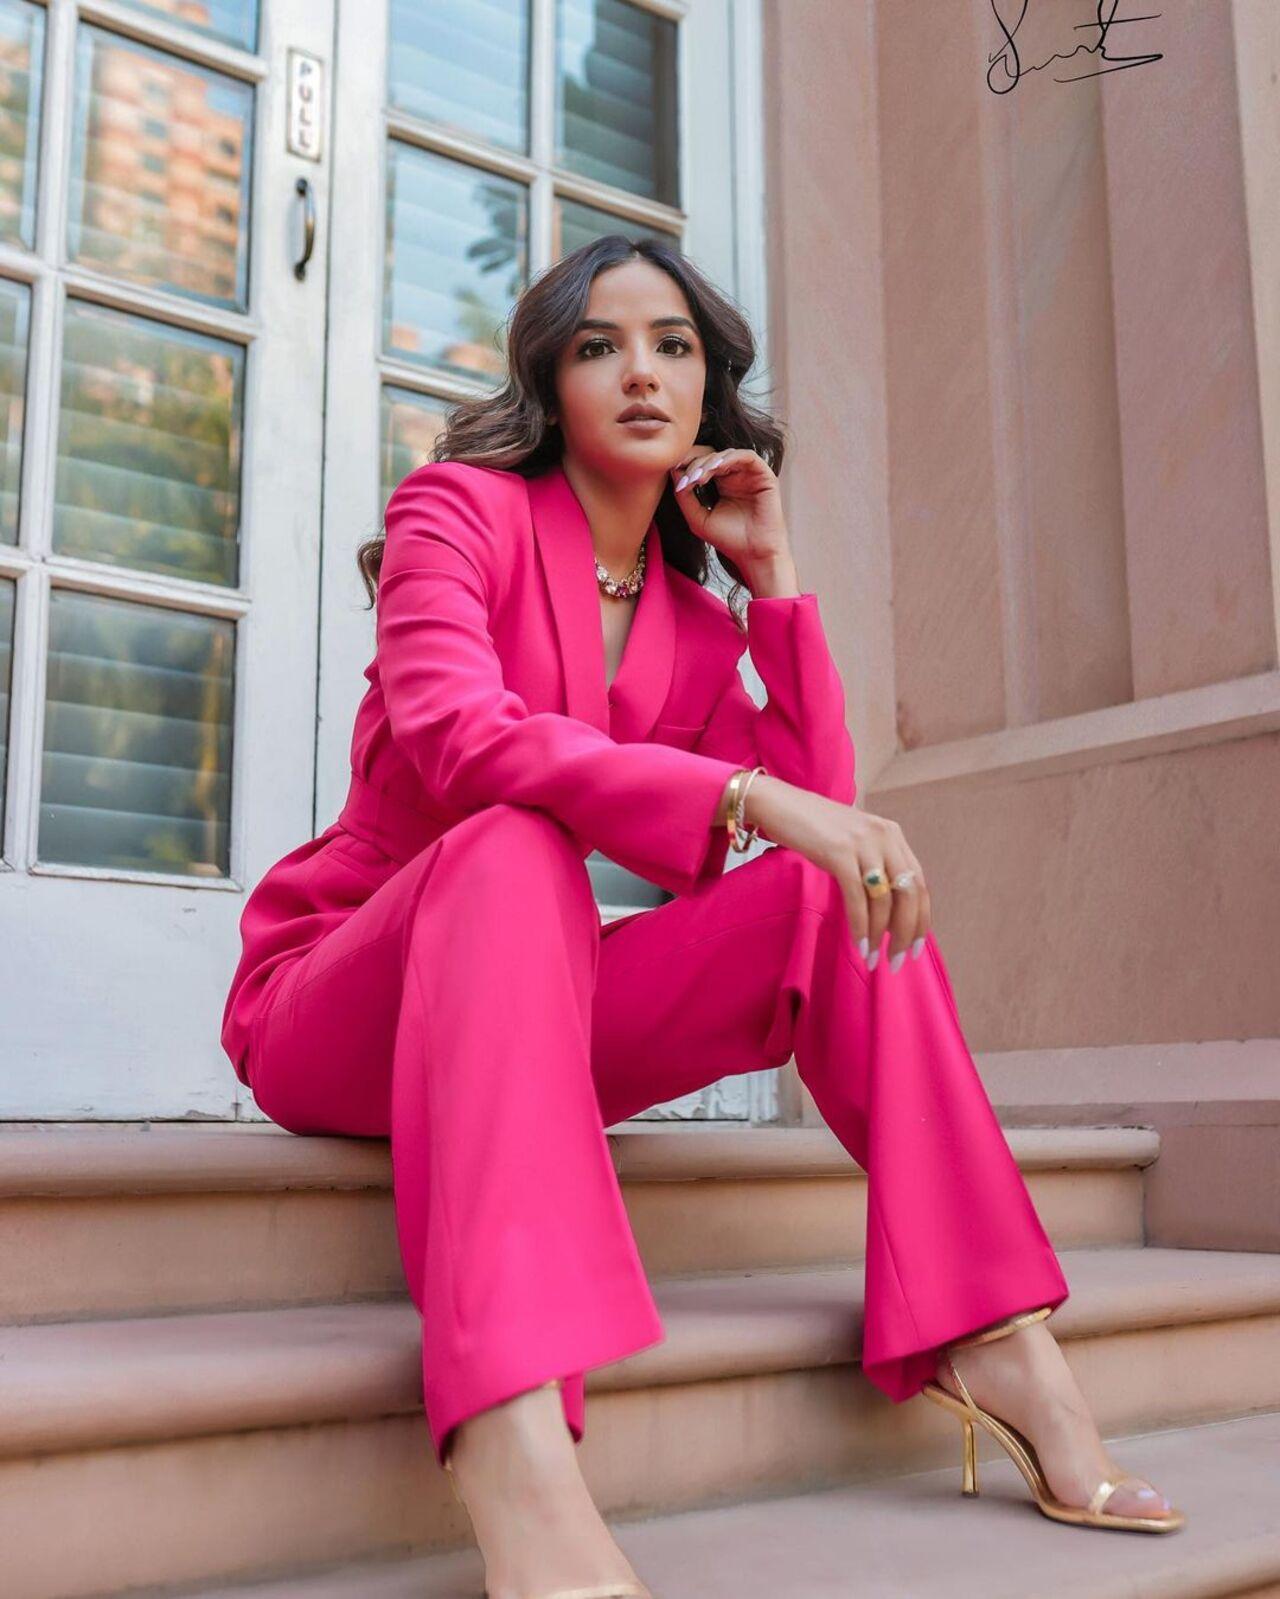 Jasmine Bhasin effortlessly exuded confidence in a pink coord set